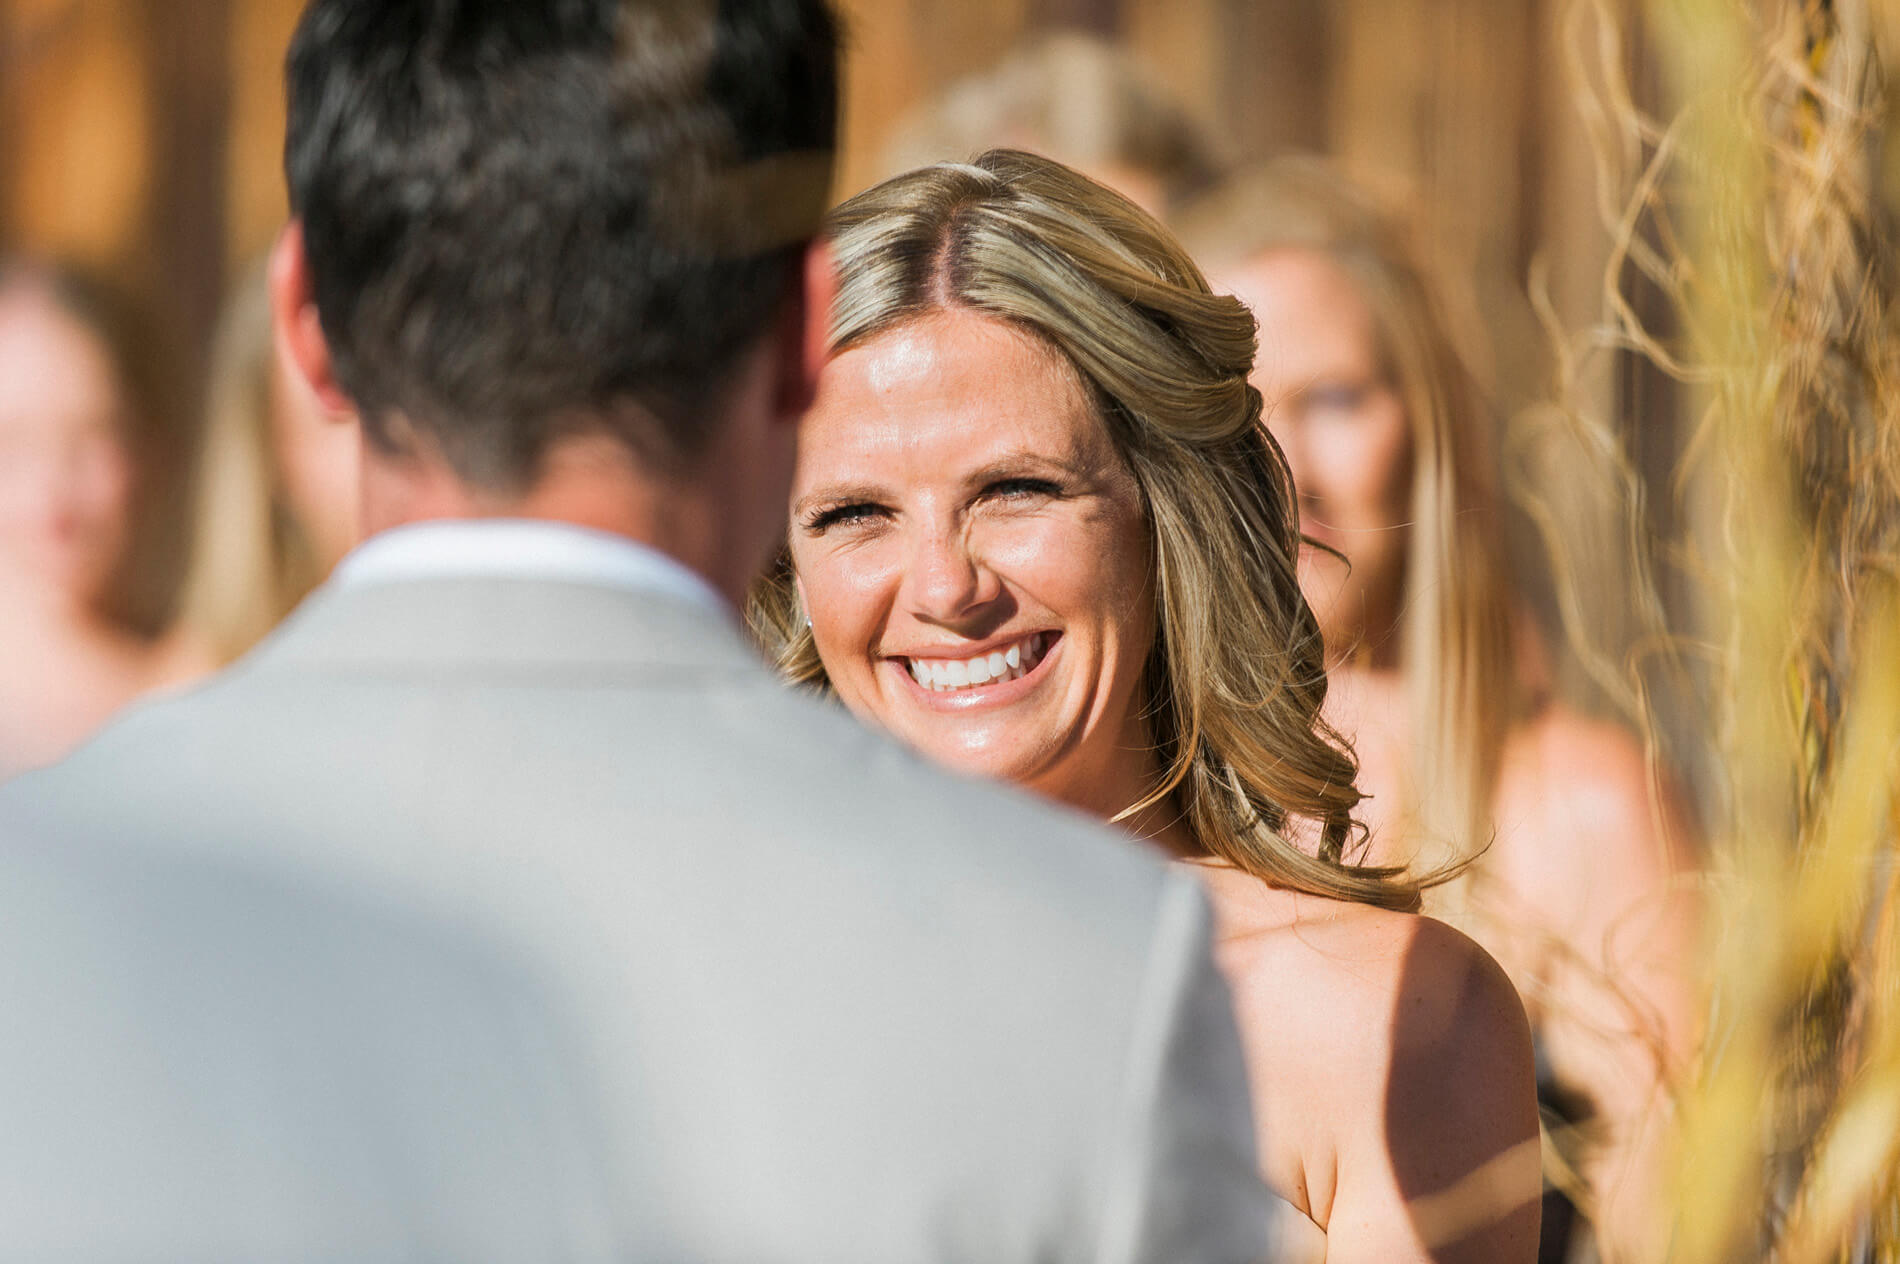 bride smiling at groom 